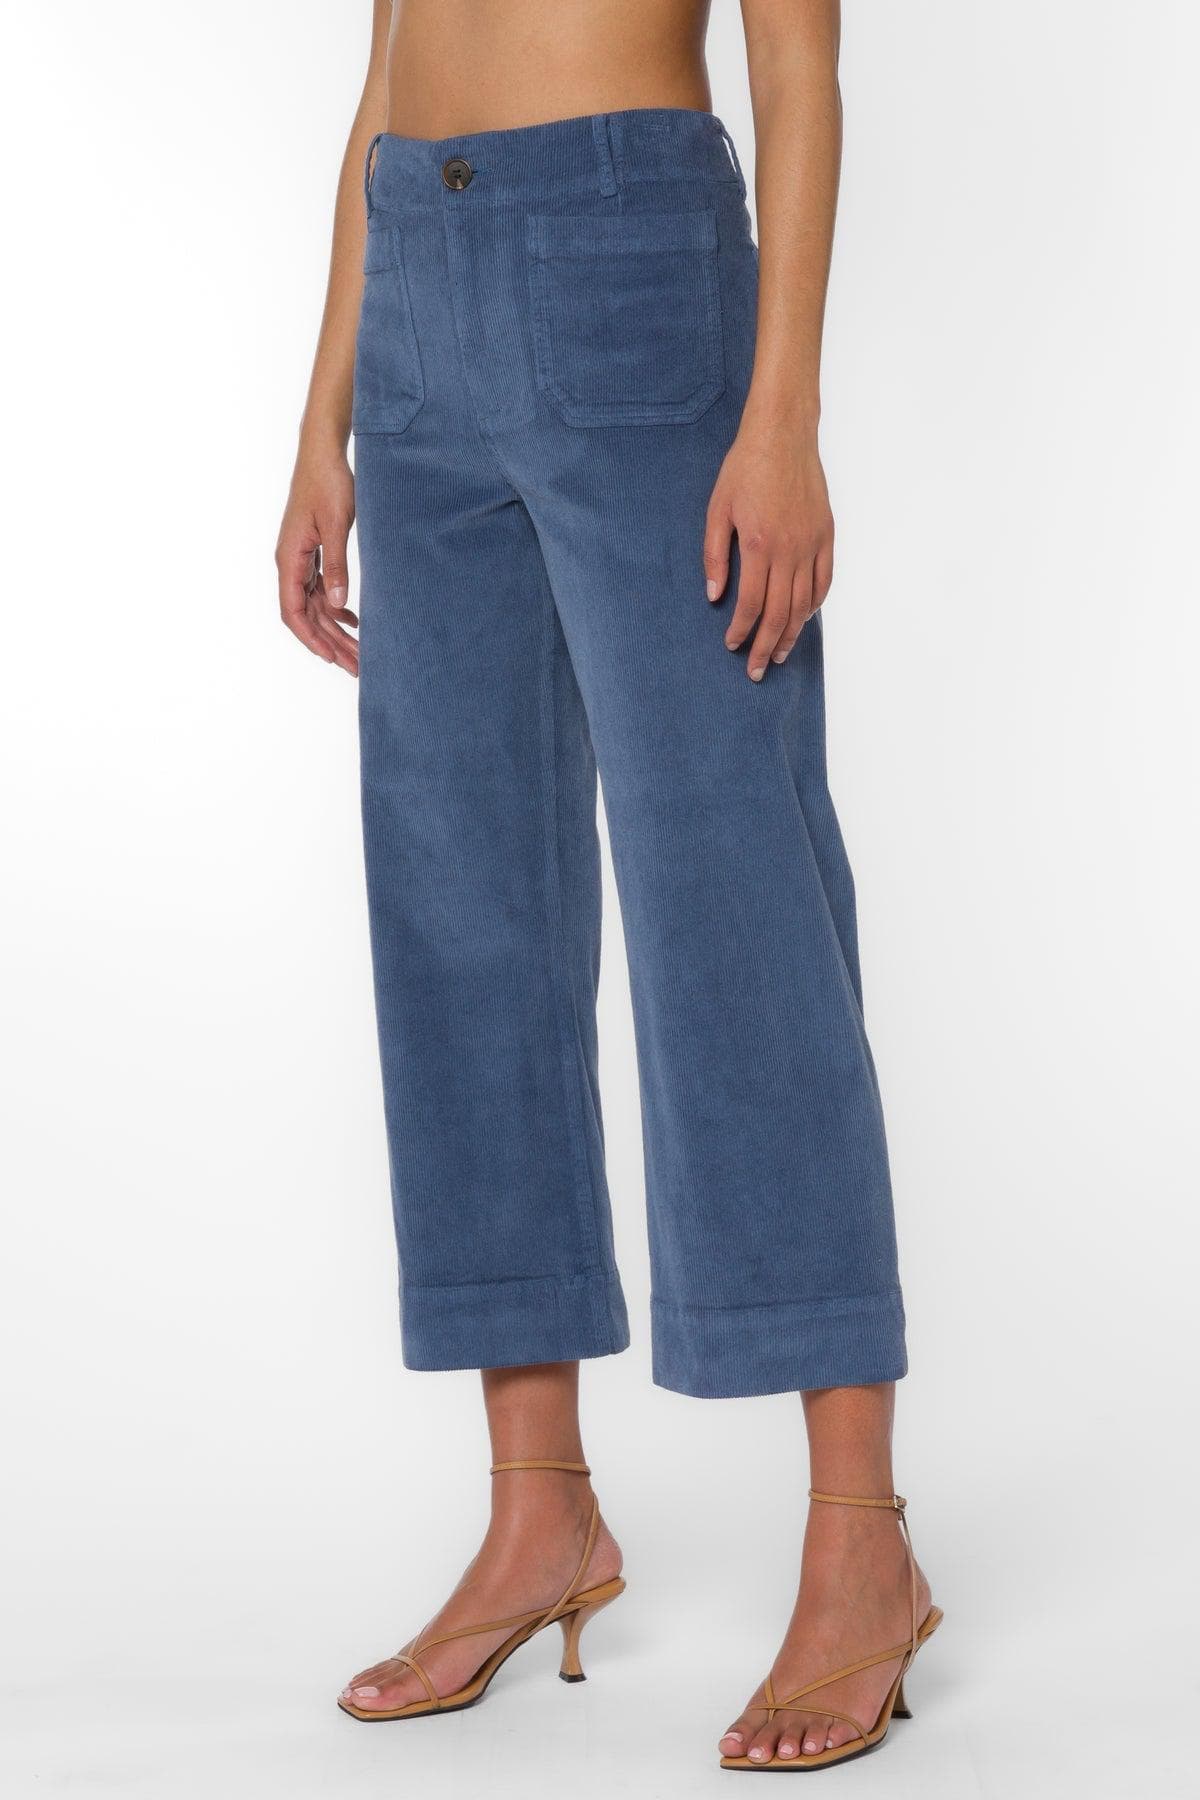 Corduroy Blue Pants Pants Scout and Poppy Fashion Boutique